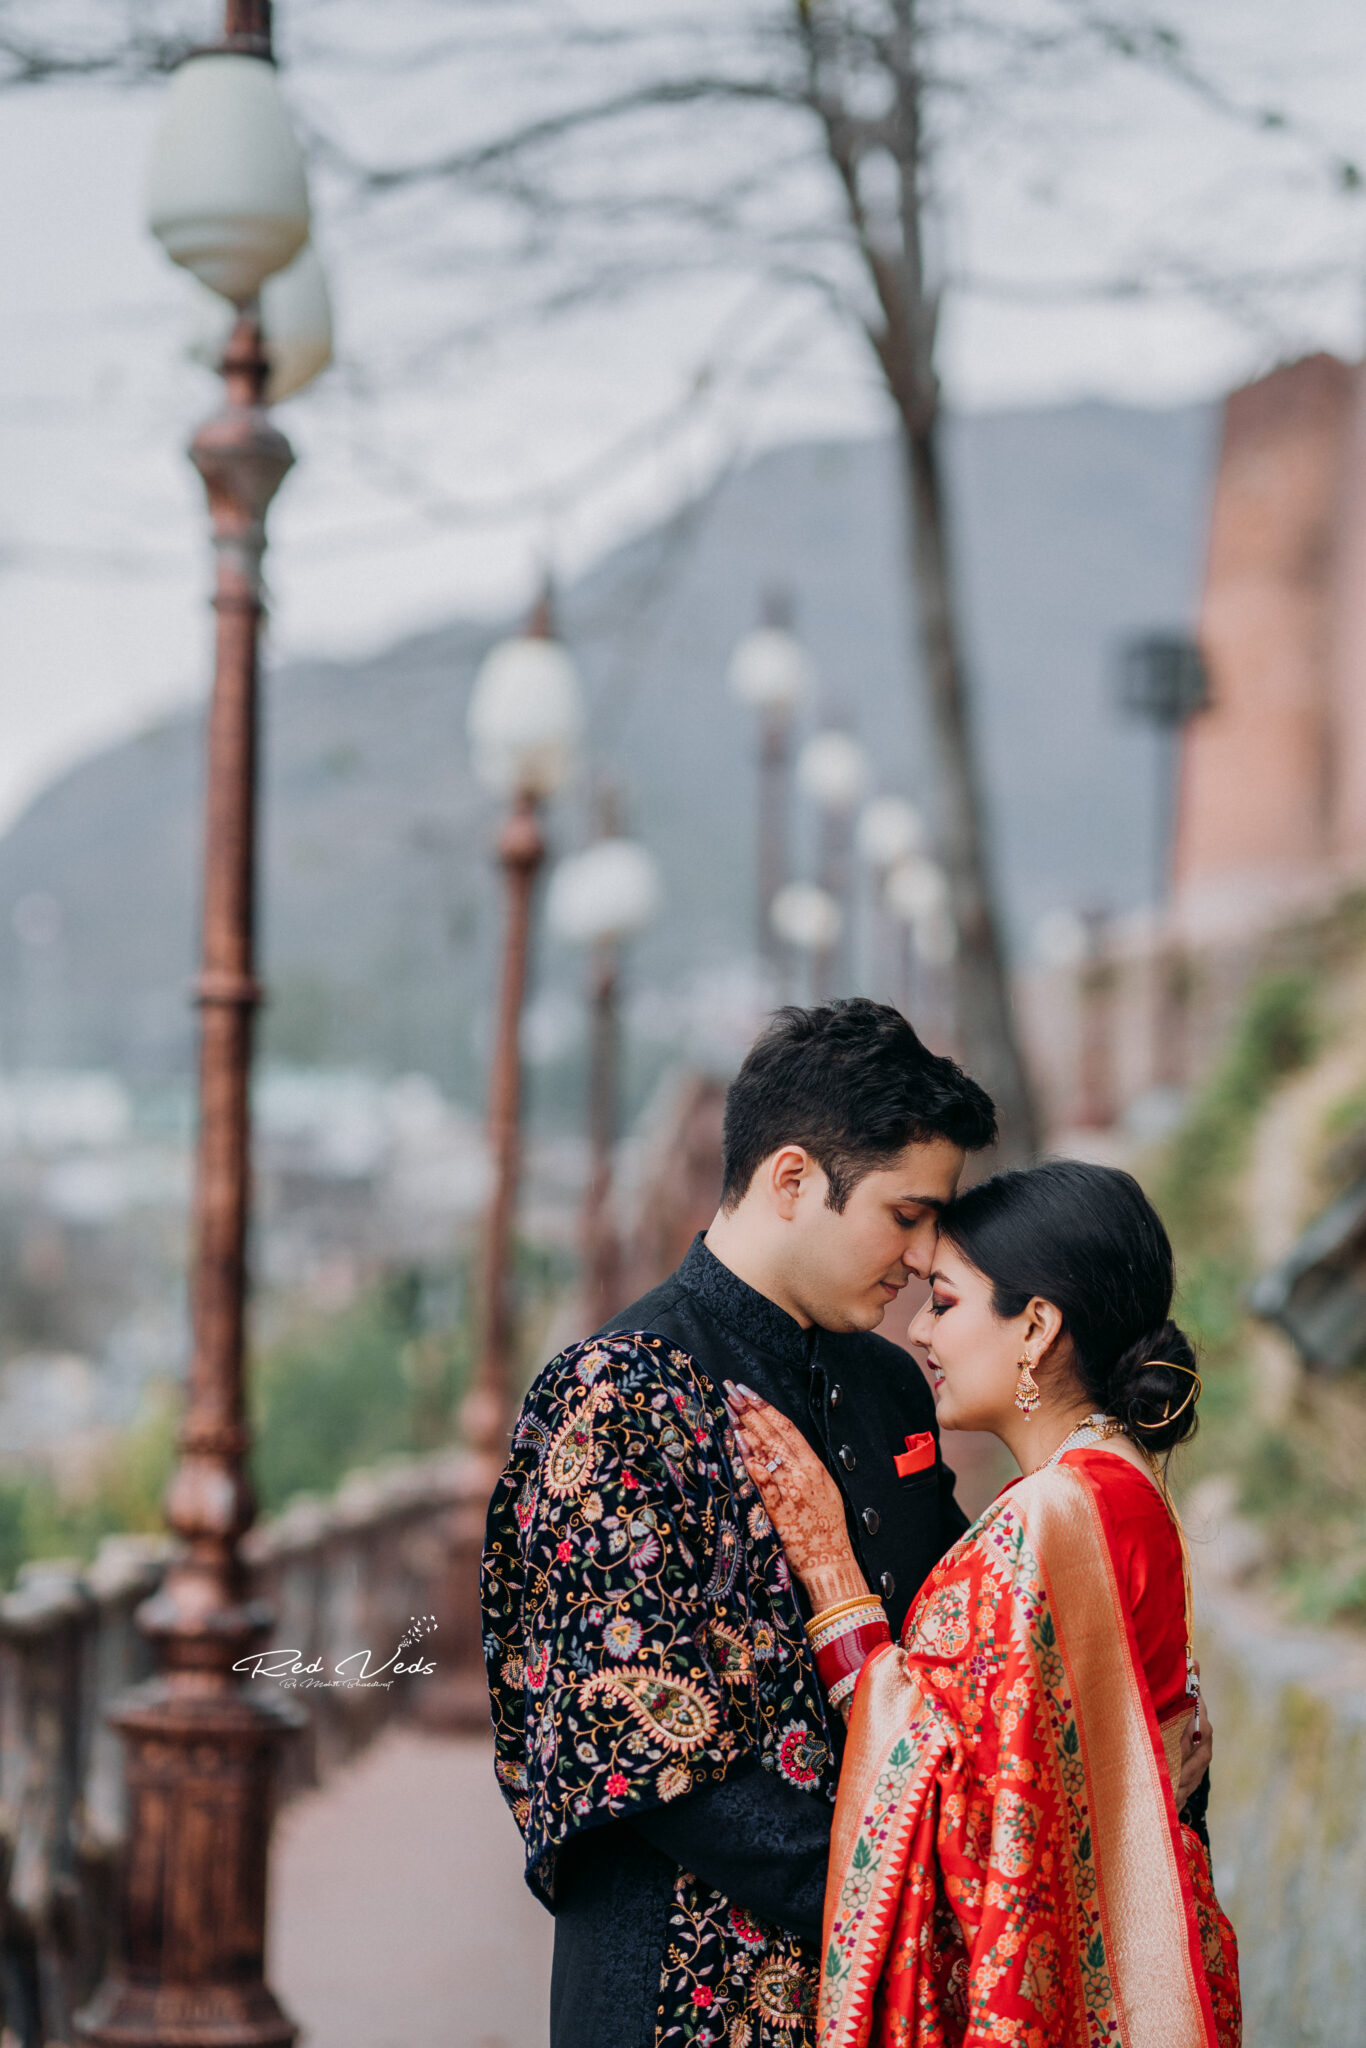 Bridal Saree | Wedding couple poses photography, Indian wedding couple  photography, Indian wedding photography poses